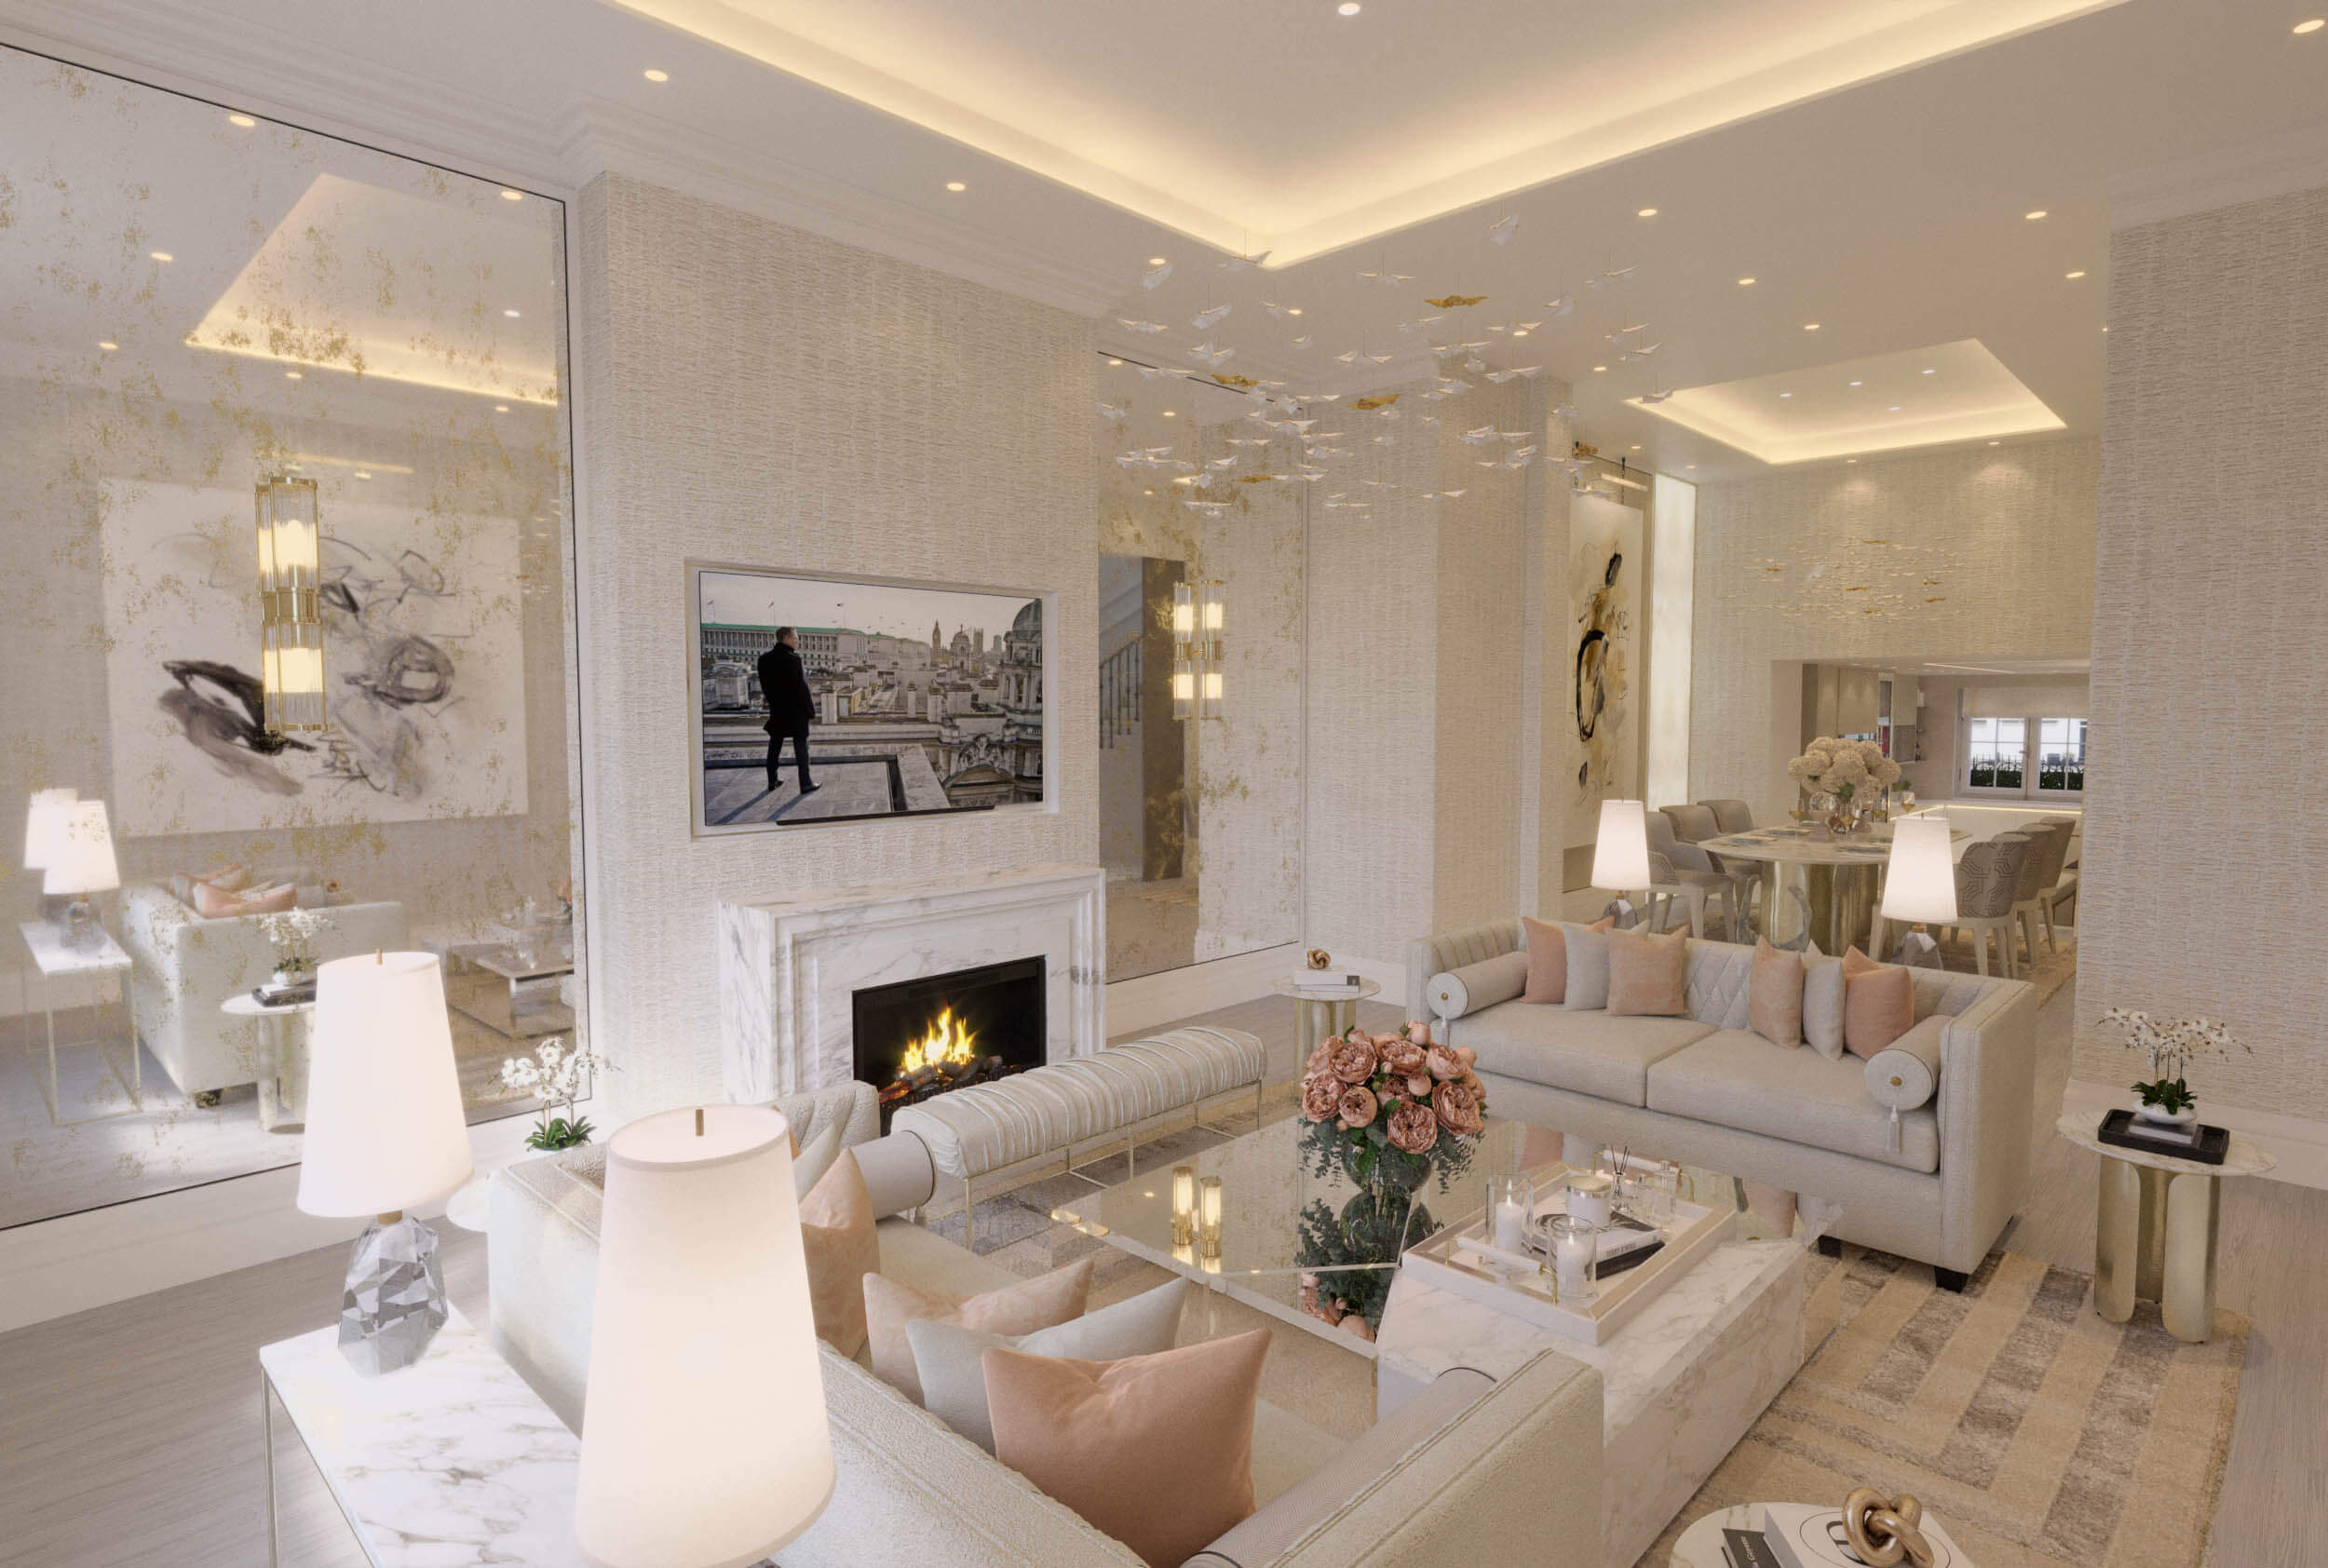 London House living room